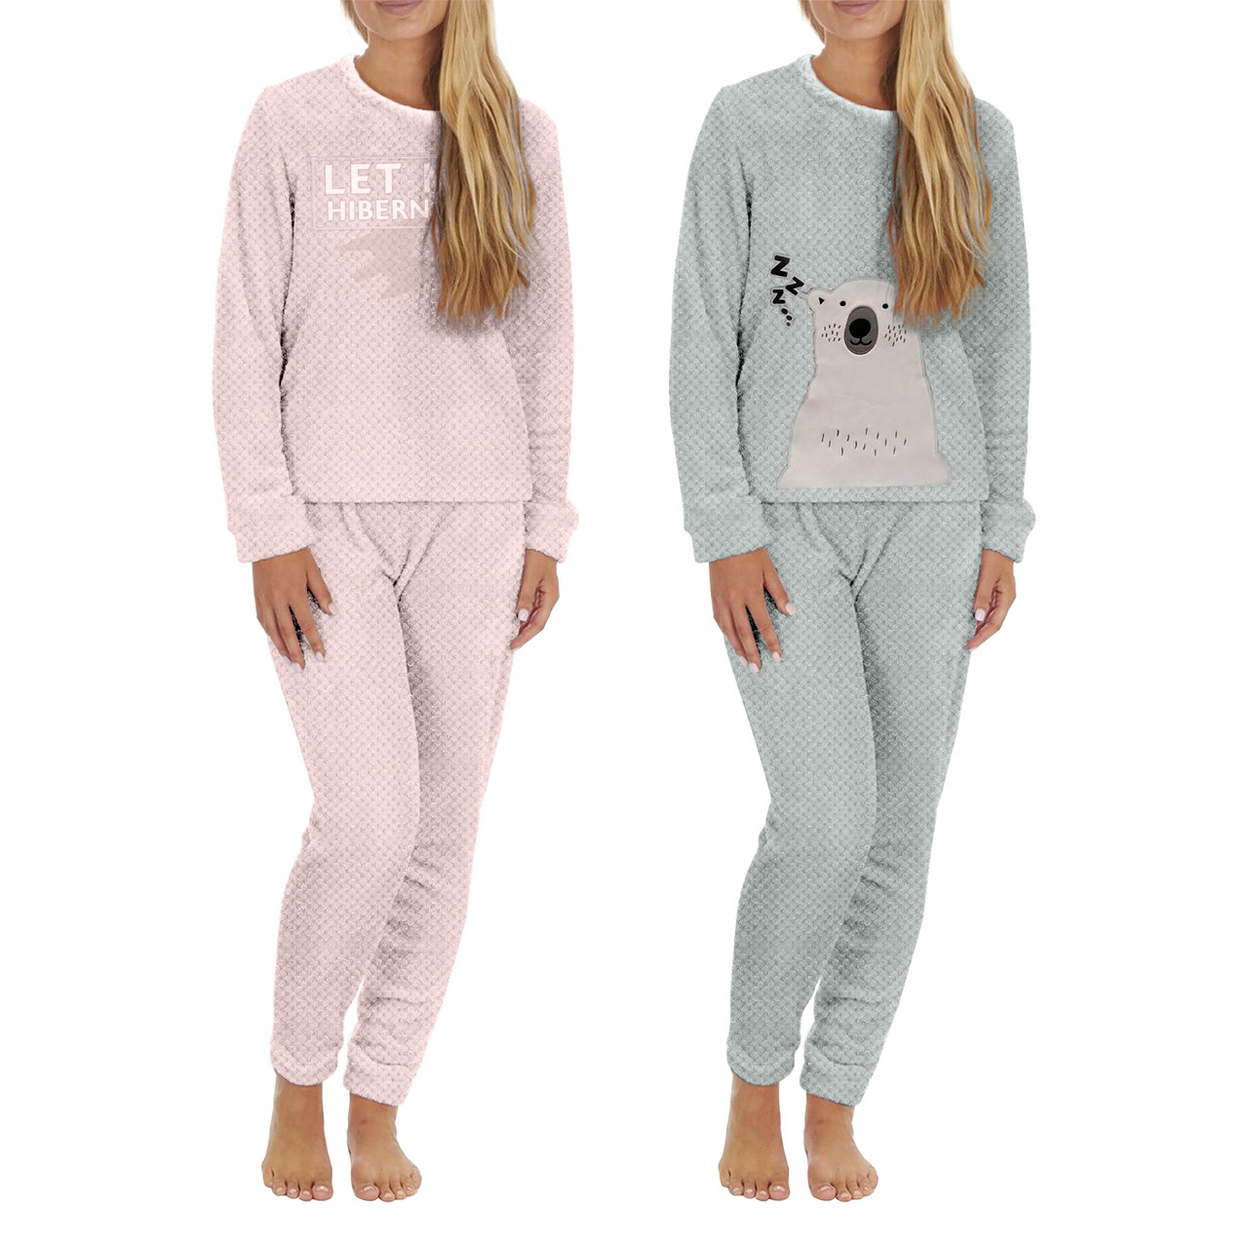 2-Sets: Women's Plush Popcorn Knit Top And Jogger Pants Pajama Set (Plus Size) - Pink, 2x